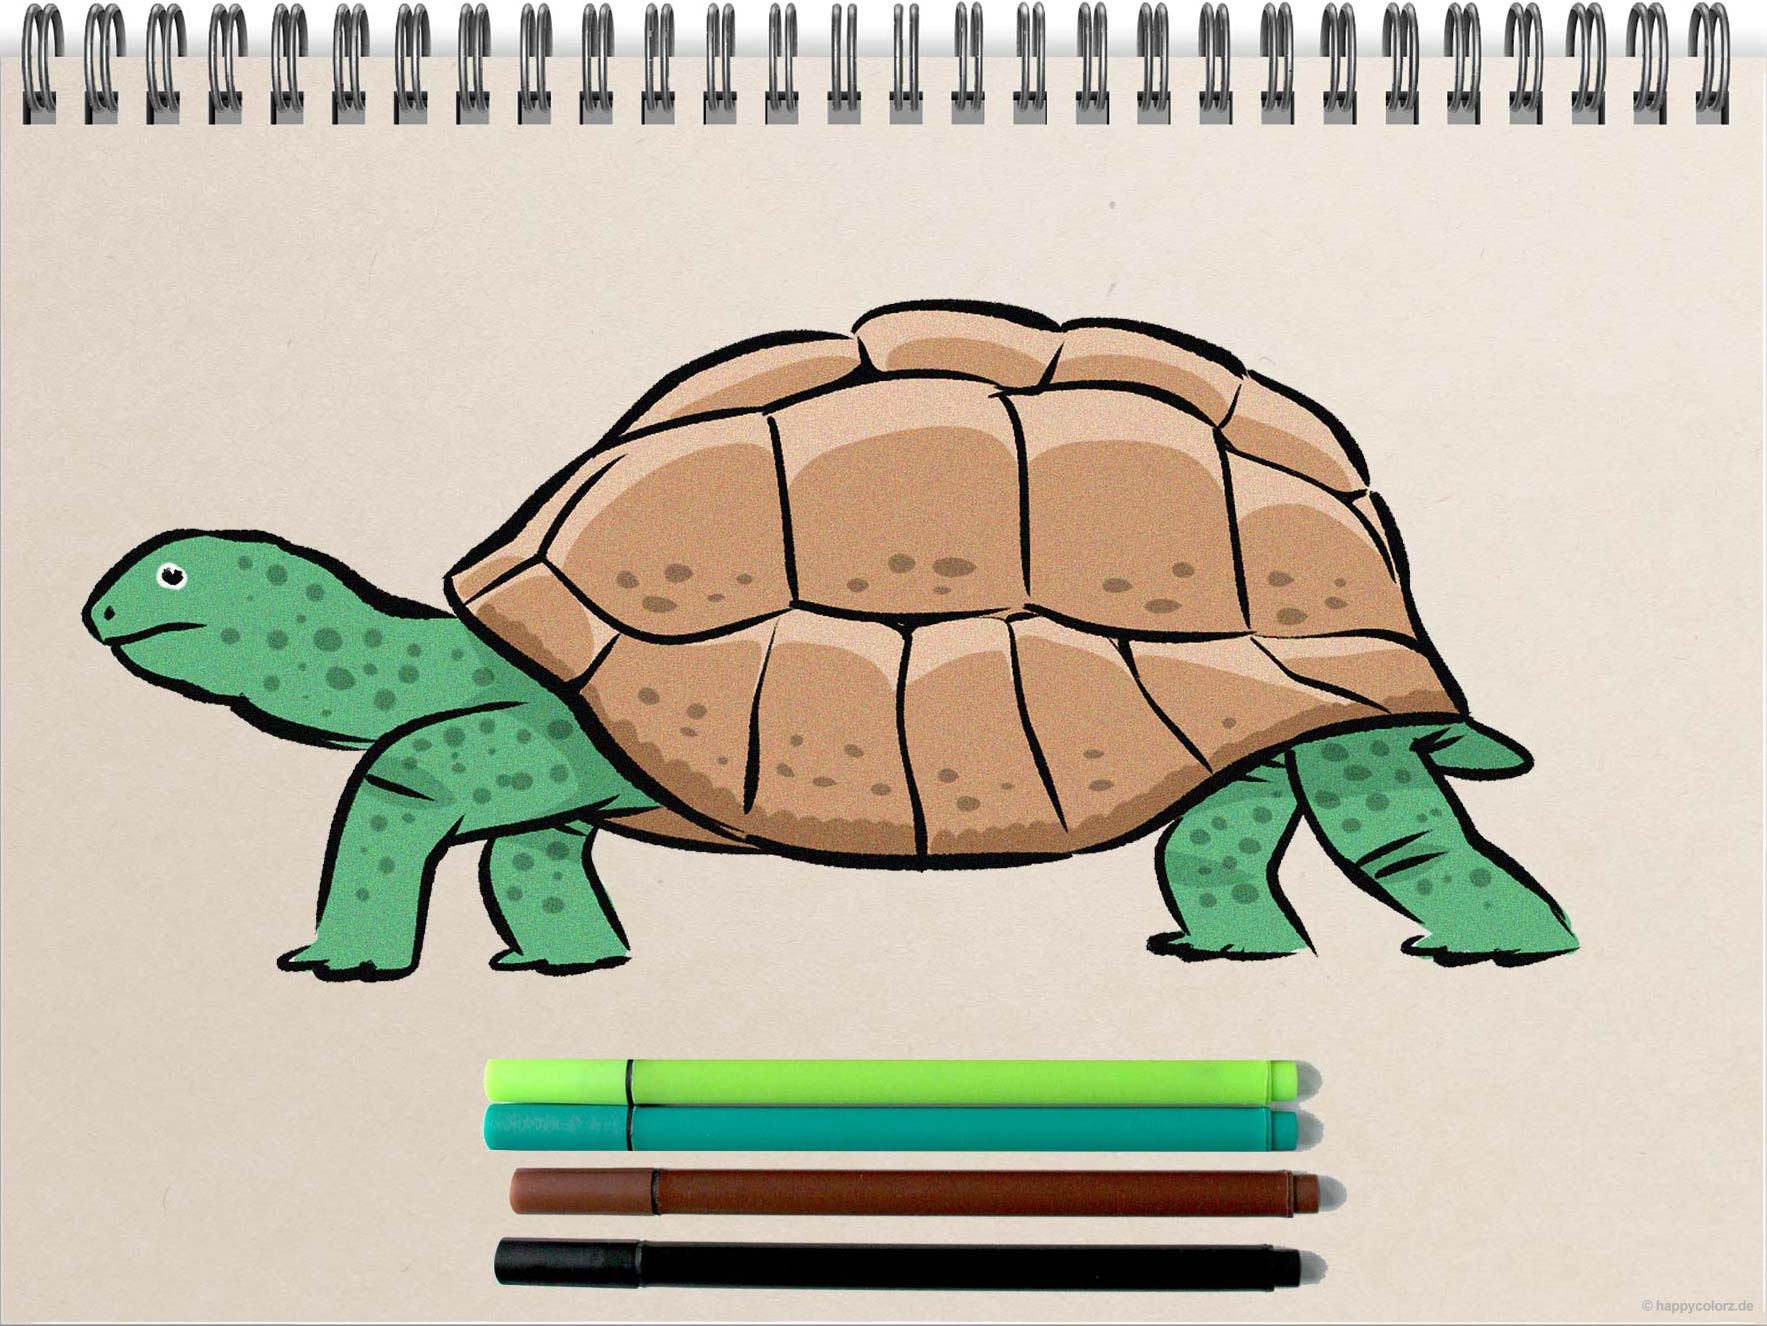 Schildkröte malen - Schritt für Schritt